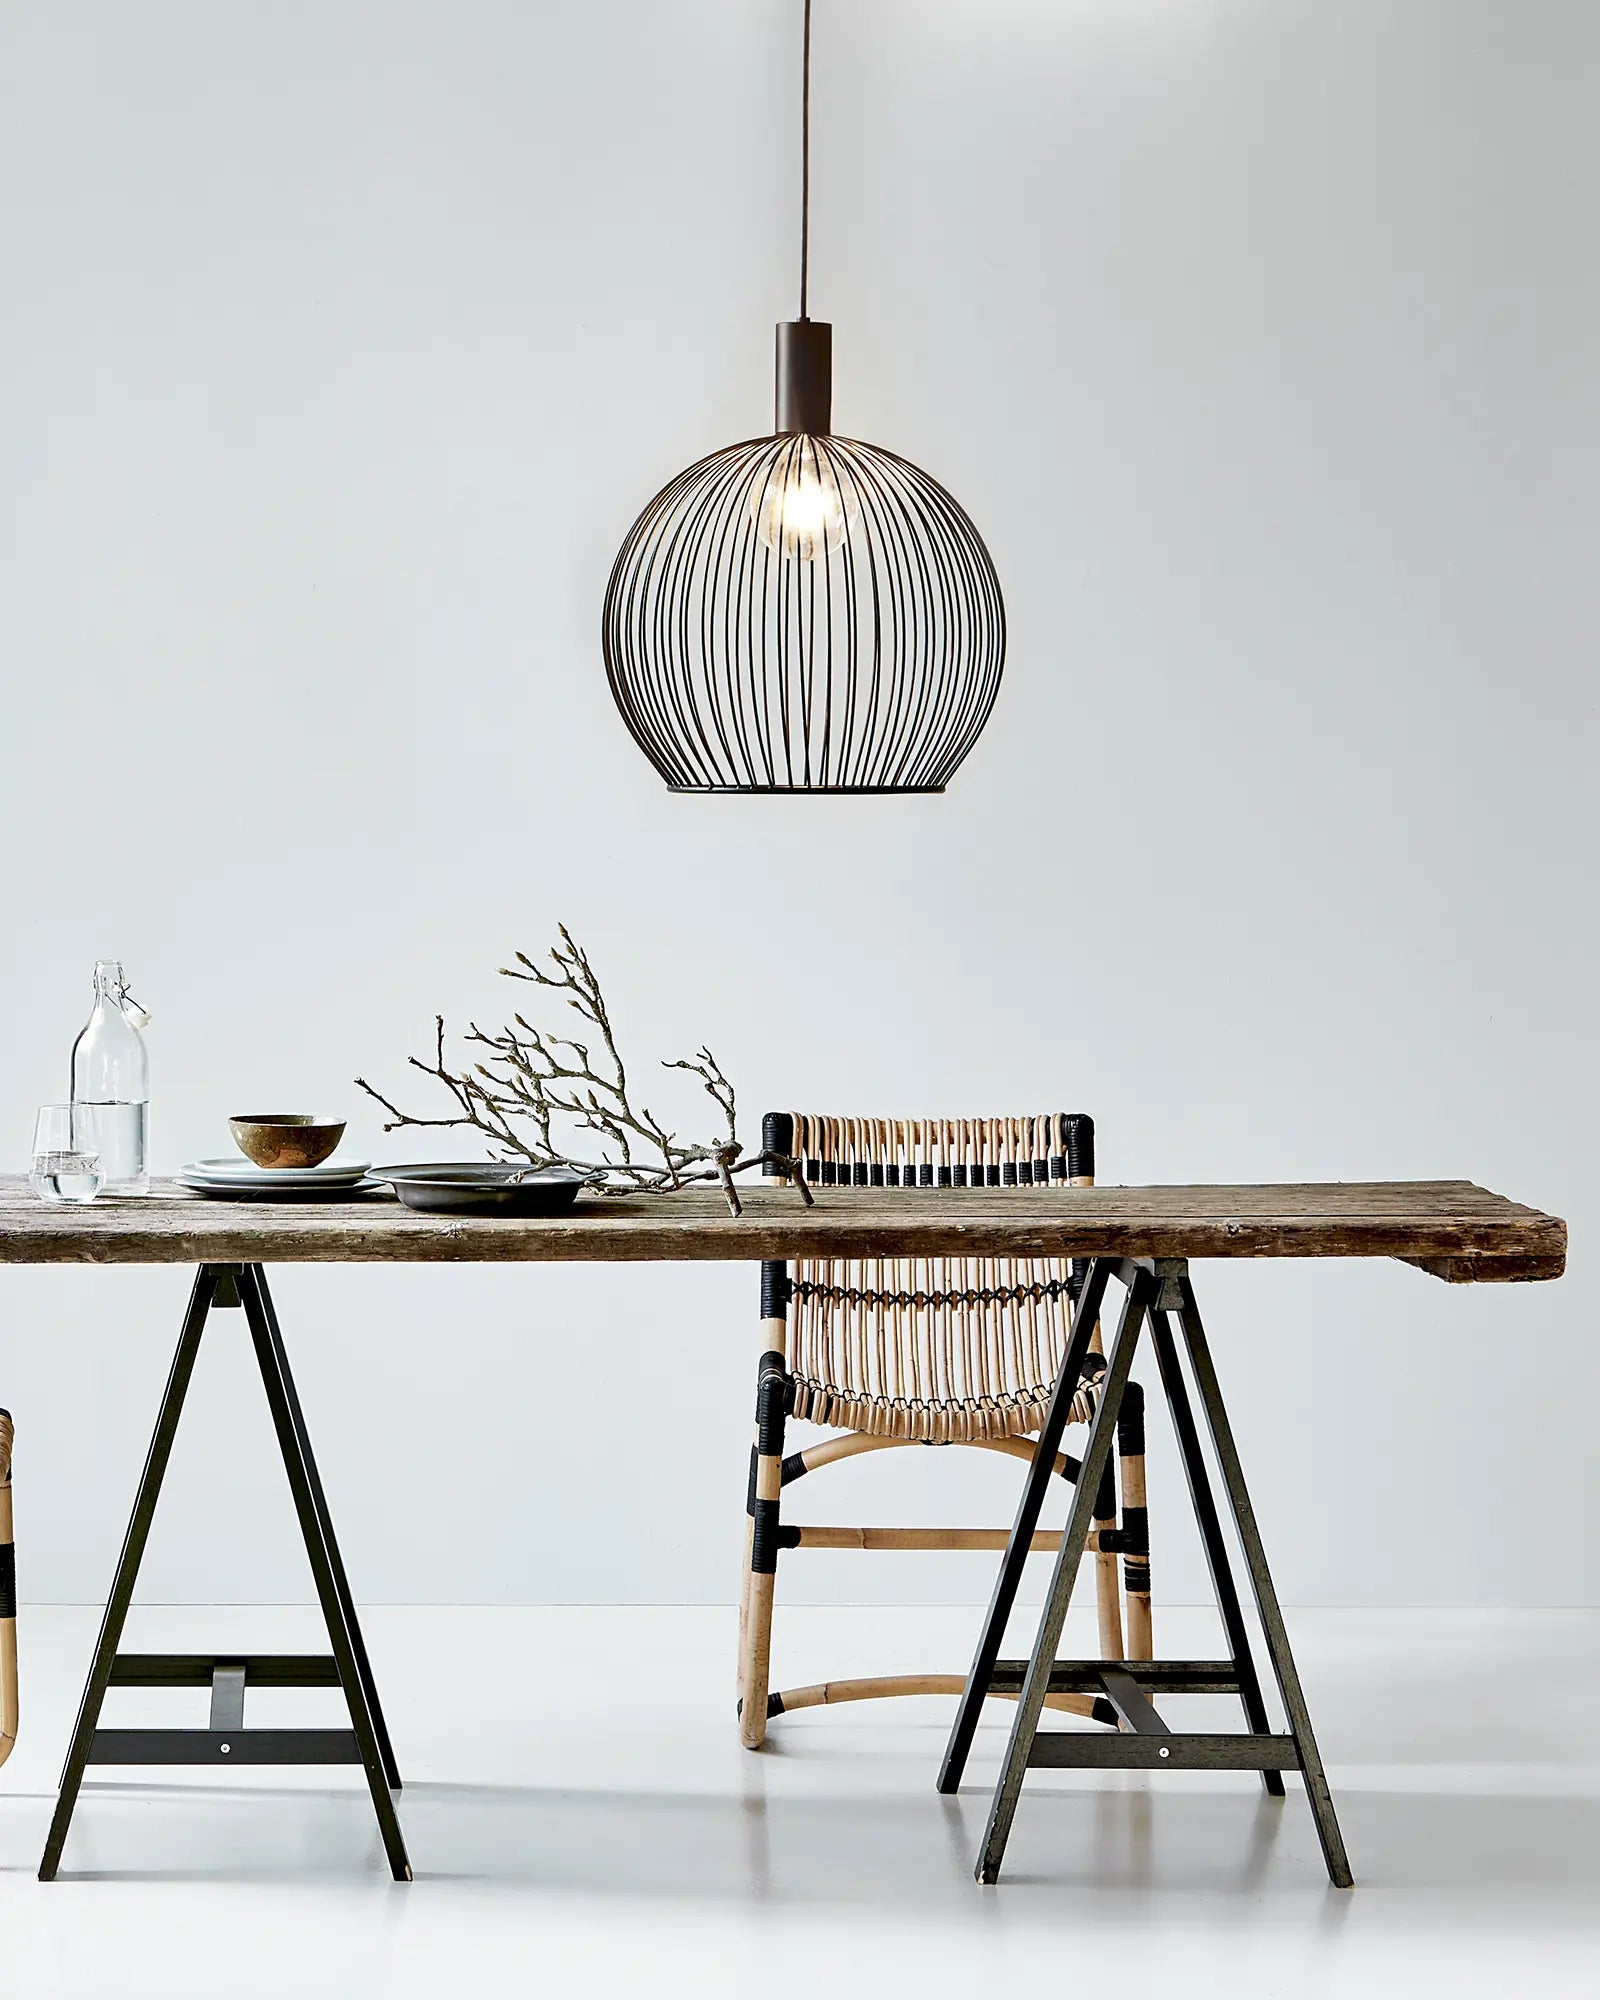 Aver bird cage Scandinavian pendant light 50cm above a dining table